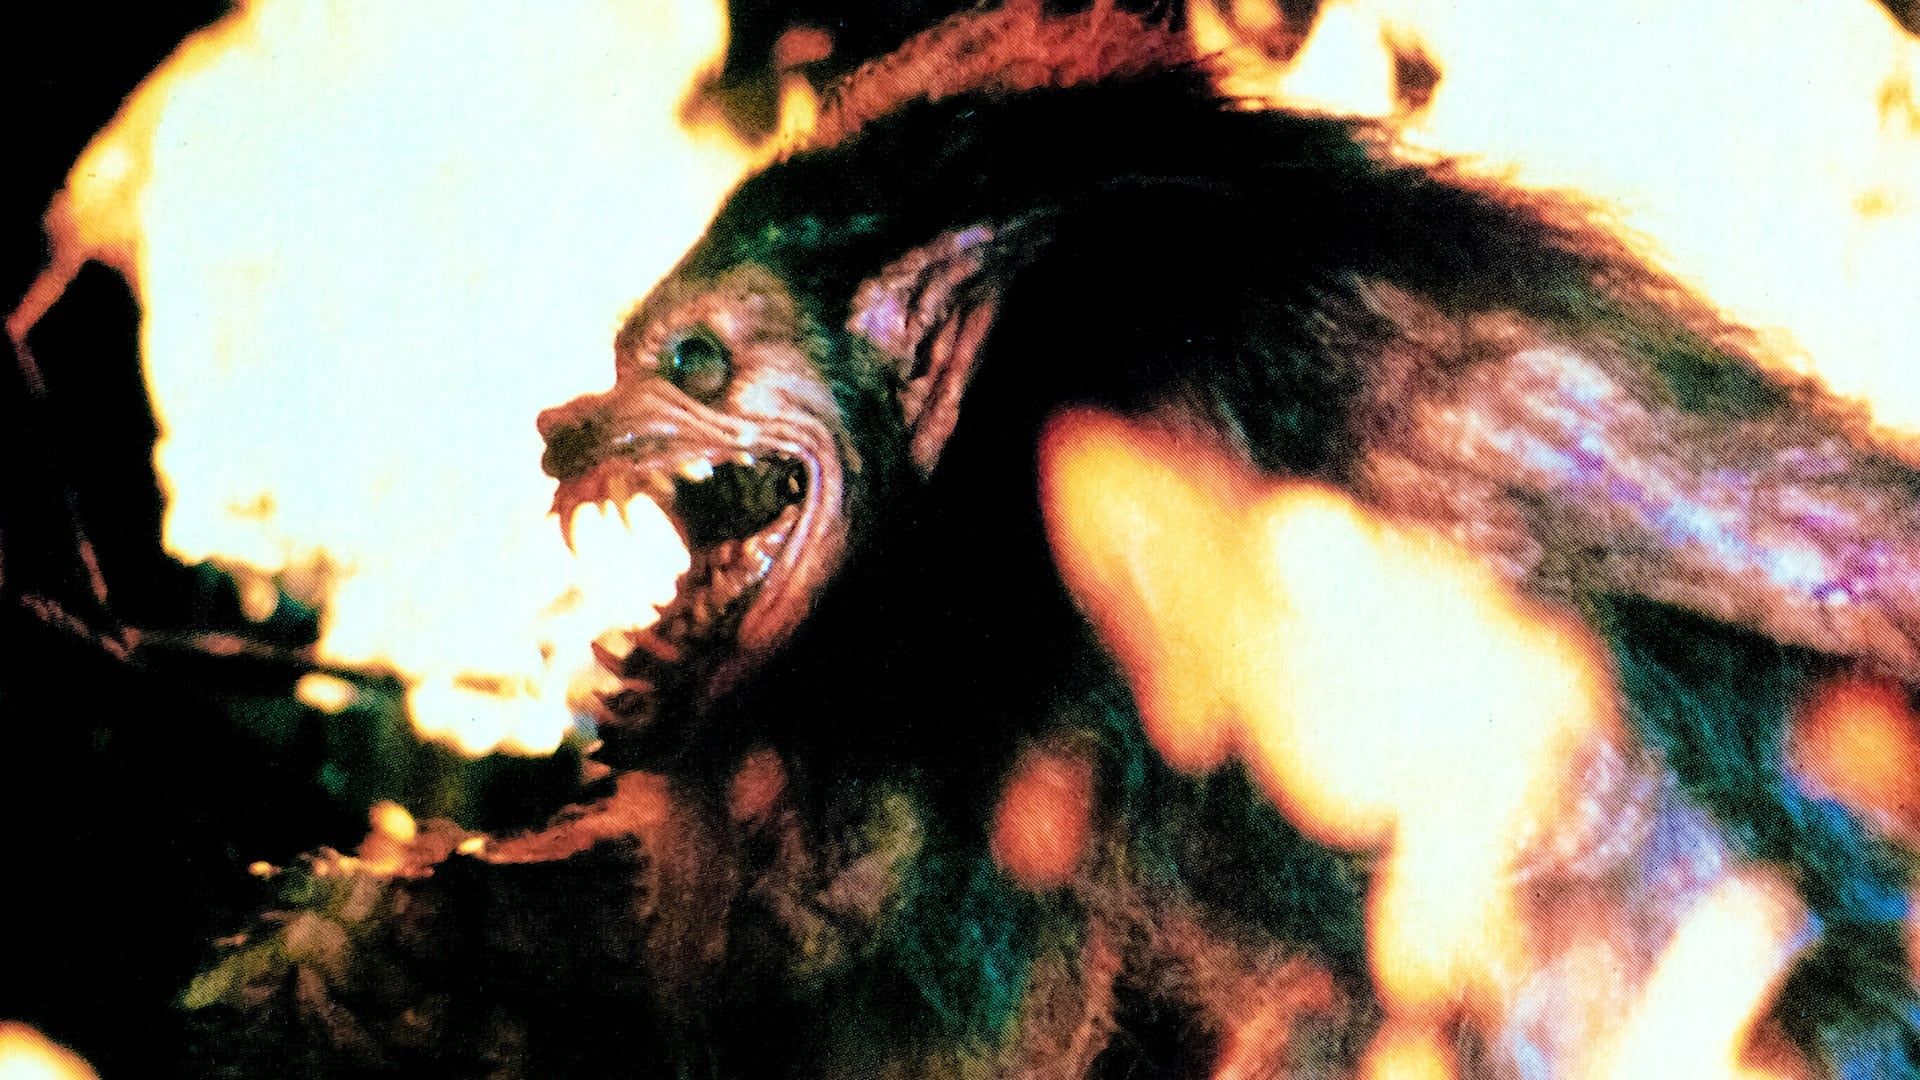 Howling IV: The Original Nightmare background